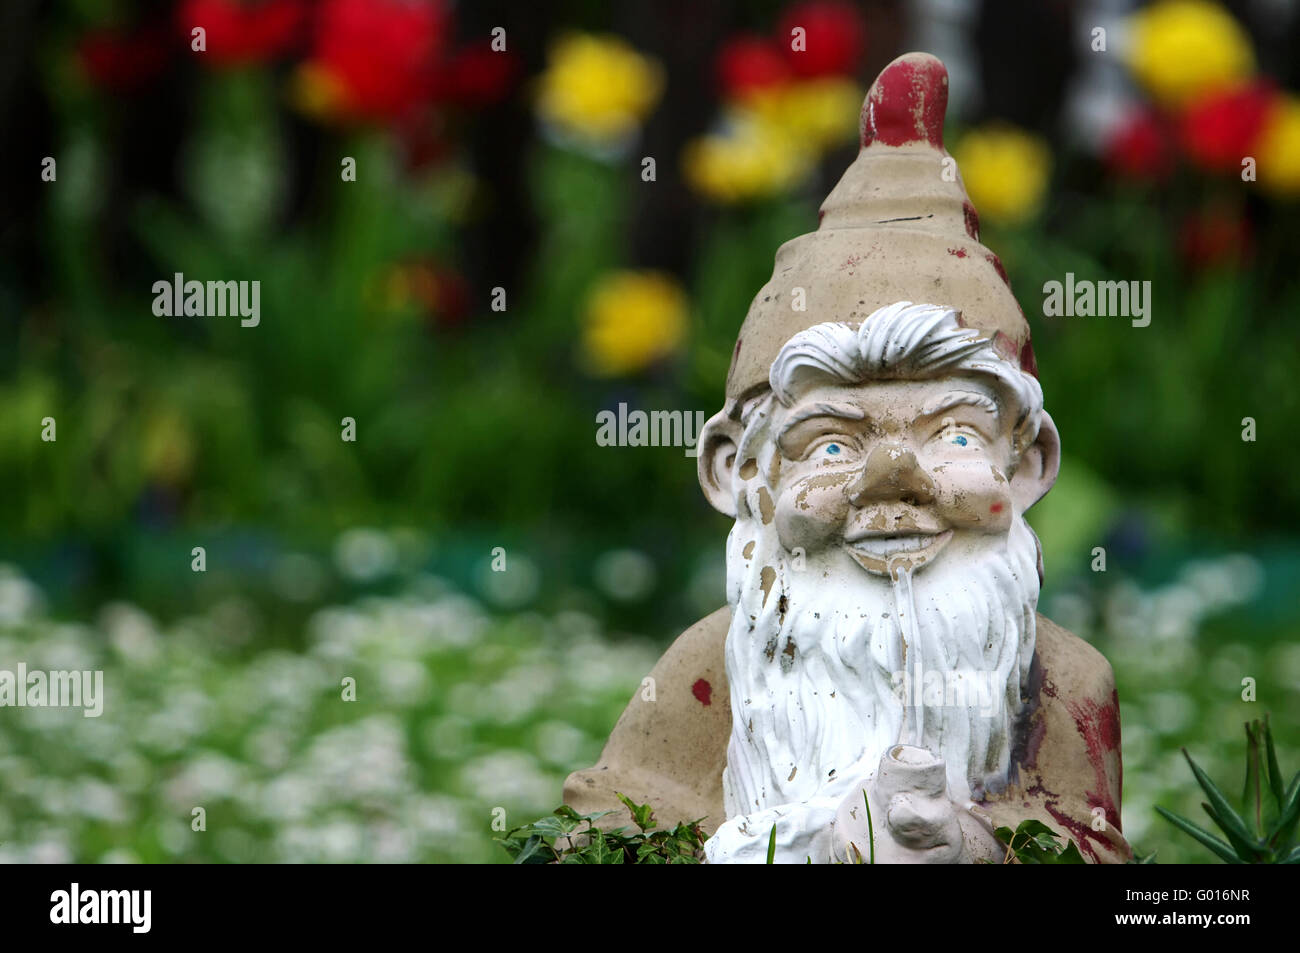 Garden gnome in spring Stock Photo